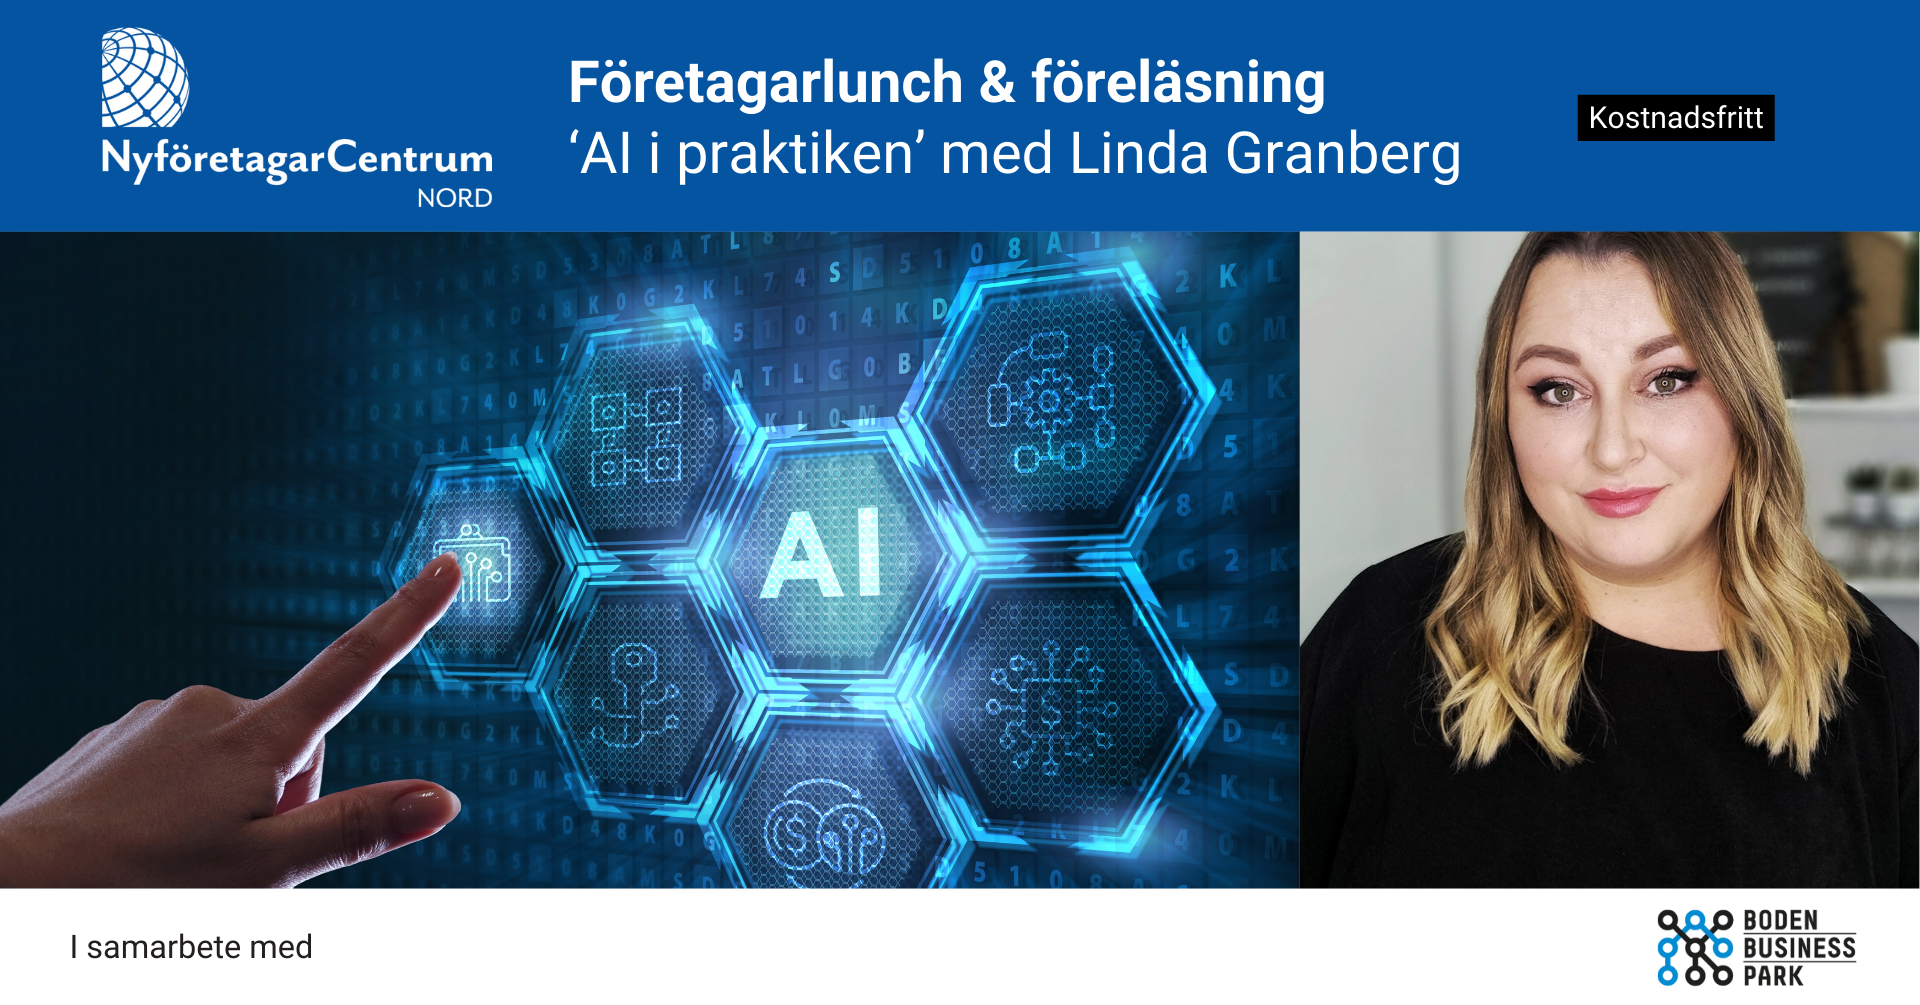 Foretagarlunch forelasning ‘AI i praktiken med Linda Granberg